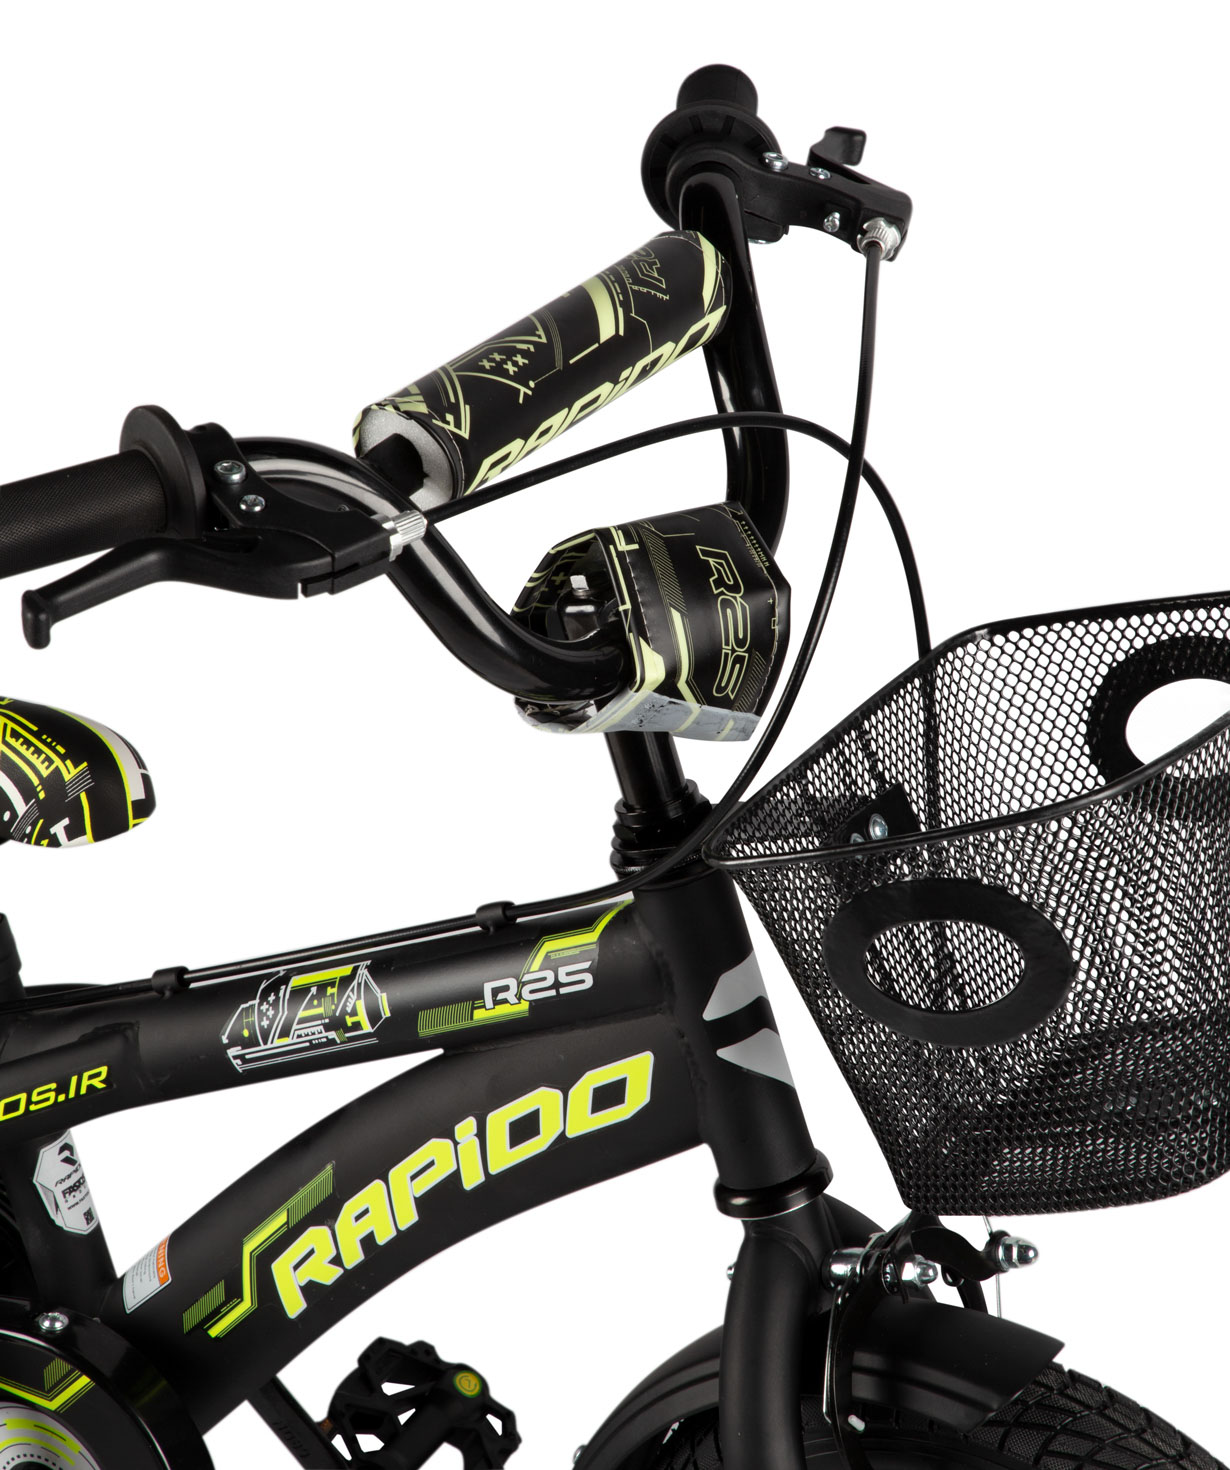 Հեծանիվ «Rapido» 12-2R25